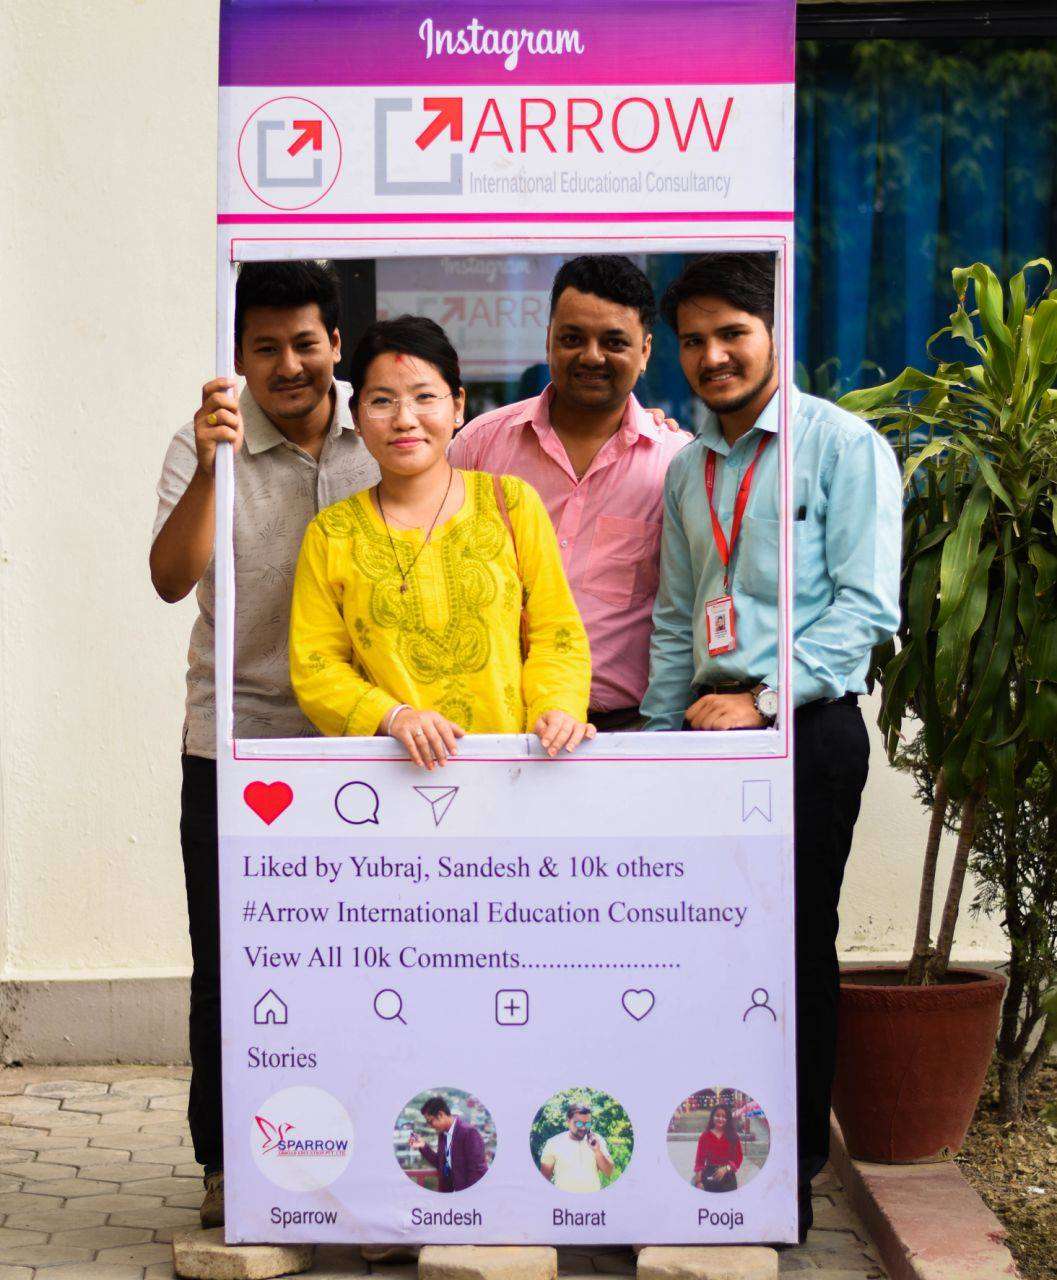 Arrow International Education Consultancy Pvt. Ltd.